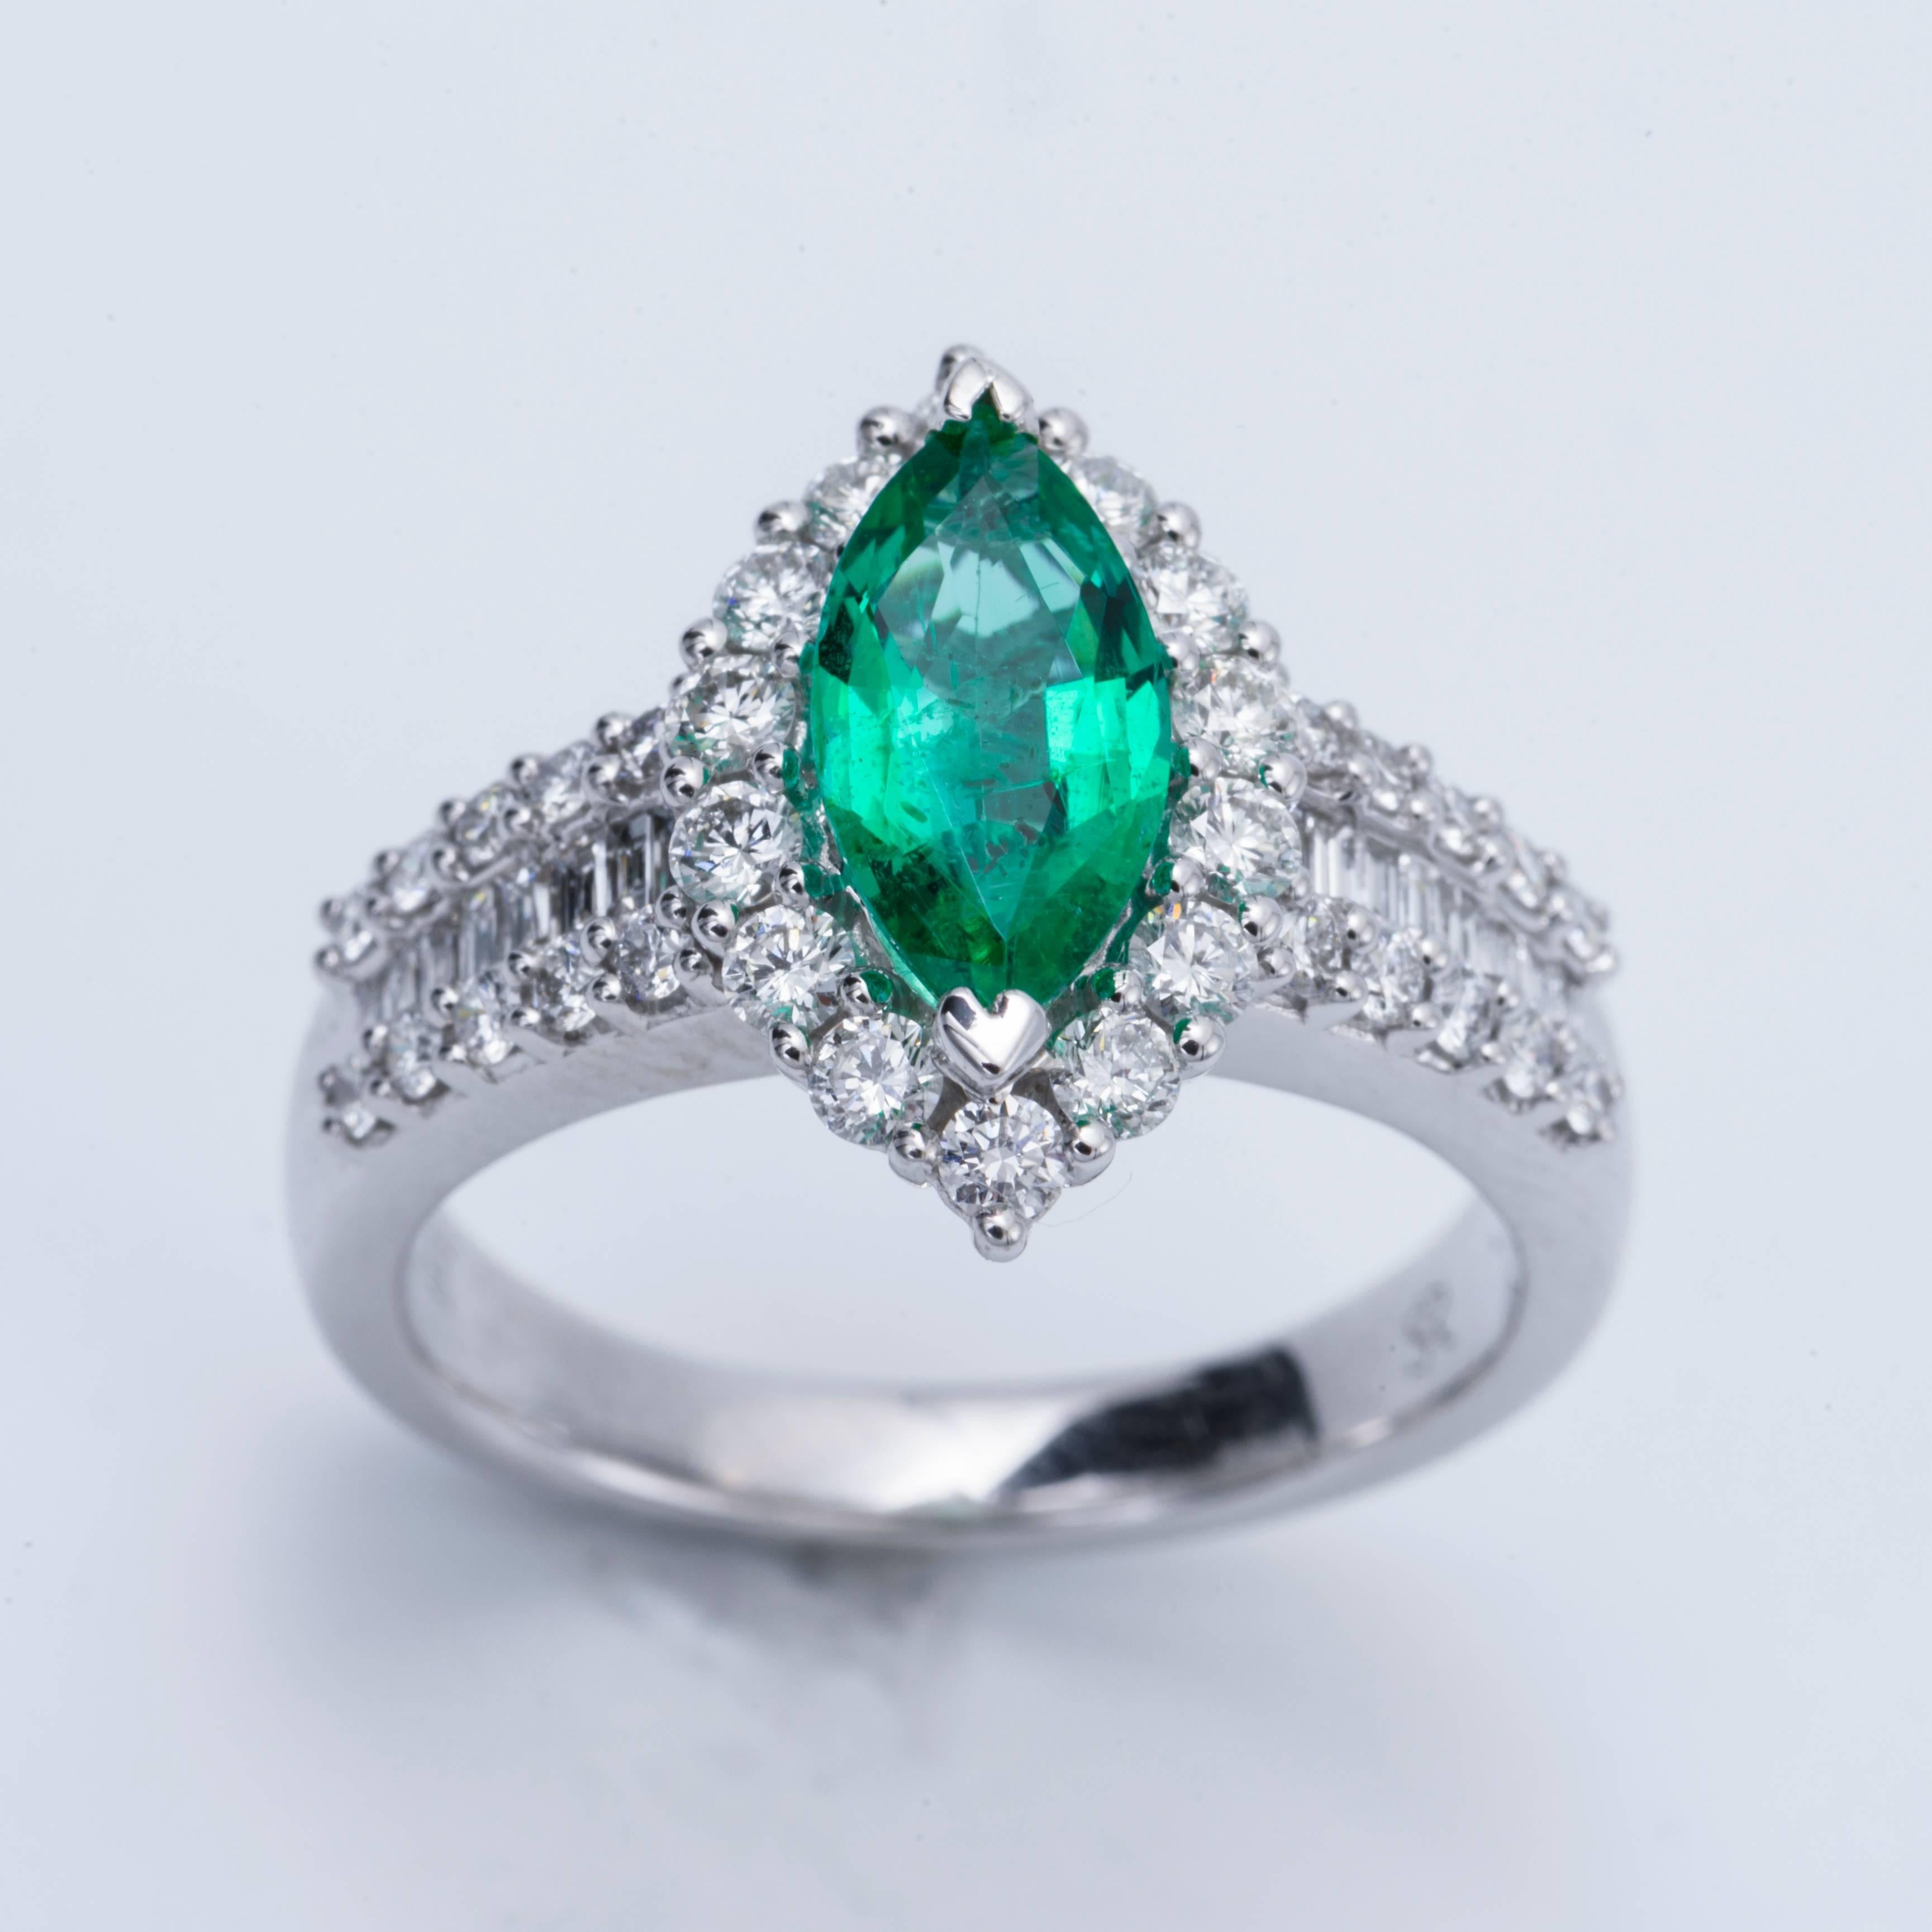 Style: 14k White Marquise Shape Zambian Emerald  Diamond Halo Engagement Ring
Material: 14k White Gold
Gemstone Details: 1 Marquise Shape Zambian Emerald approximately 0.88 ct. 10x5 mm
Diamond Details: Approximately 0.92ctw of diamonds. Diamonds are